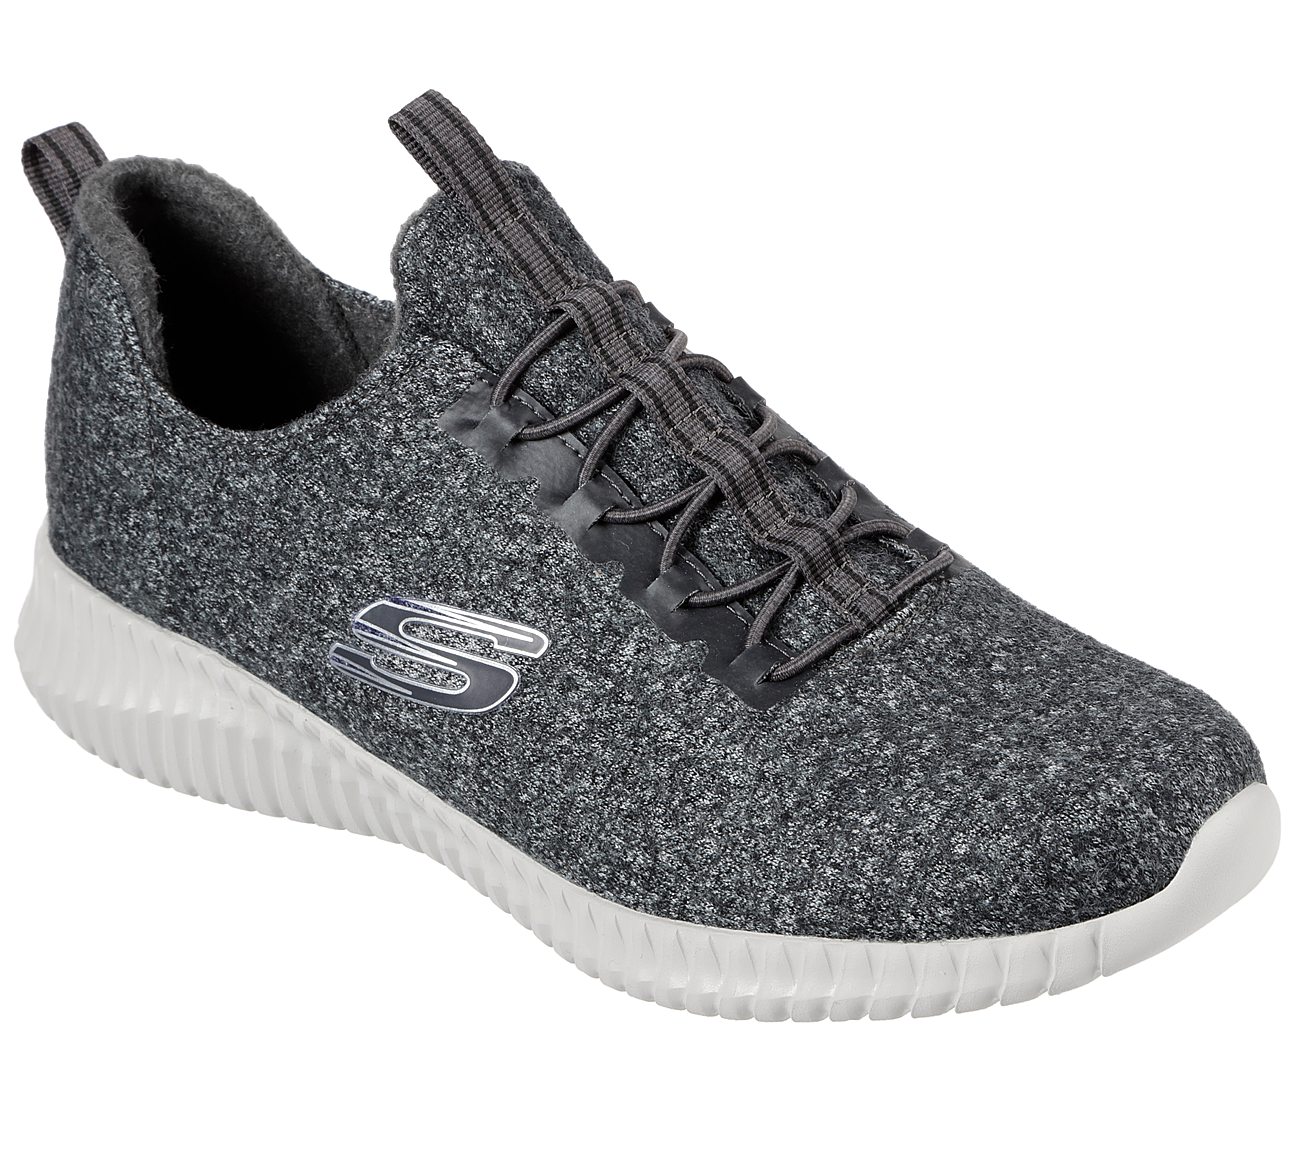 SKEAJ|#Skechers Herren Elite Flex Sneaker, (Charcoal Premium Wool/Synthetic/Metal/Trim Ccl), 45 EU